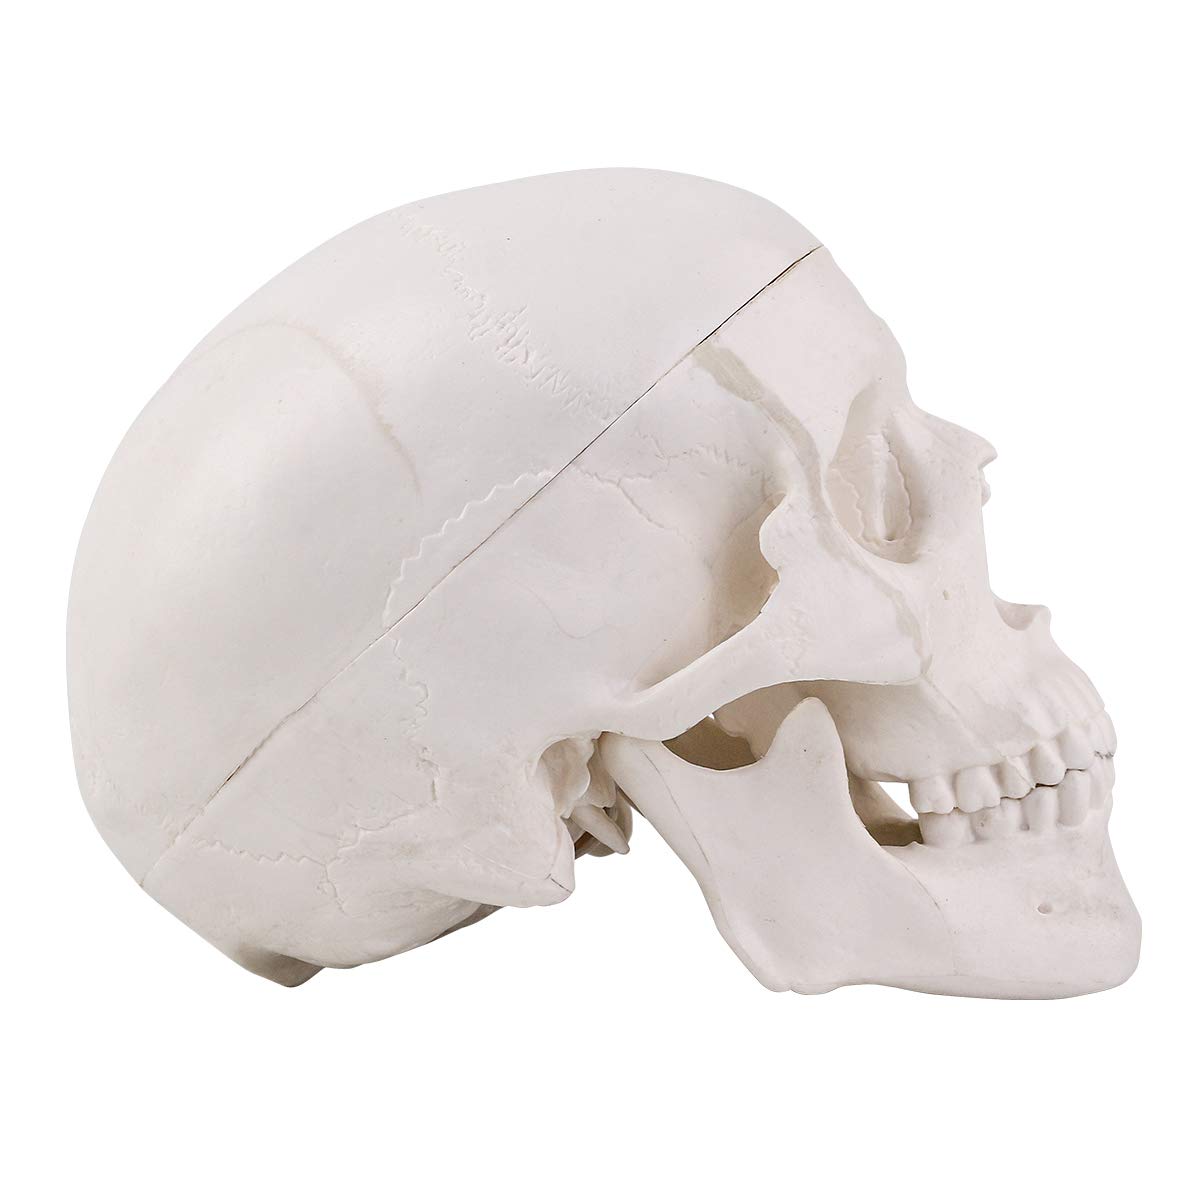 RONTEN Mini Skull Model Small Size 